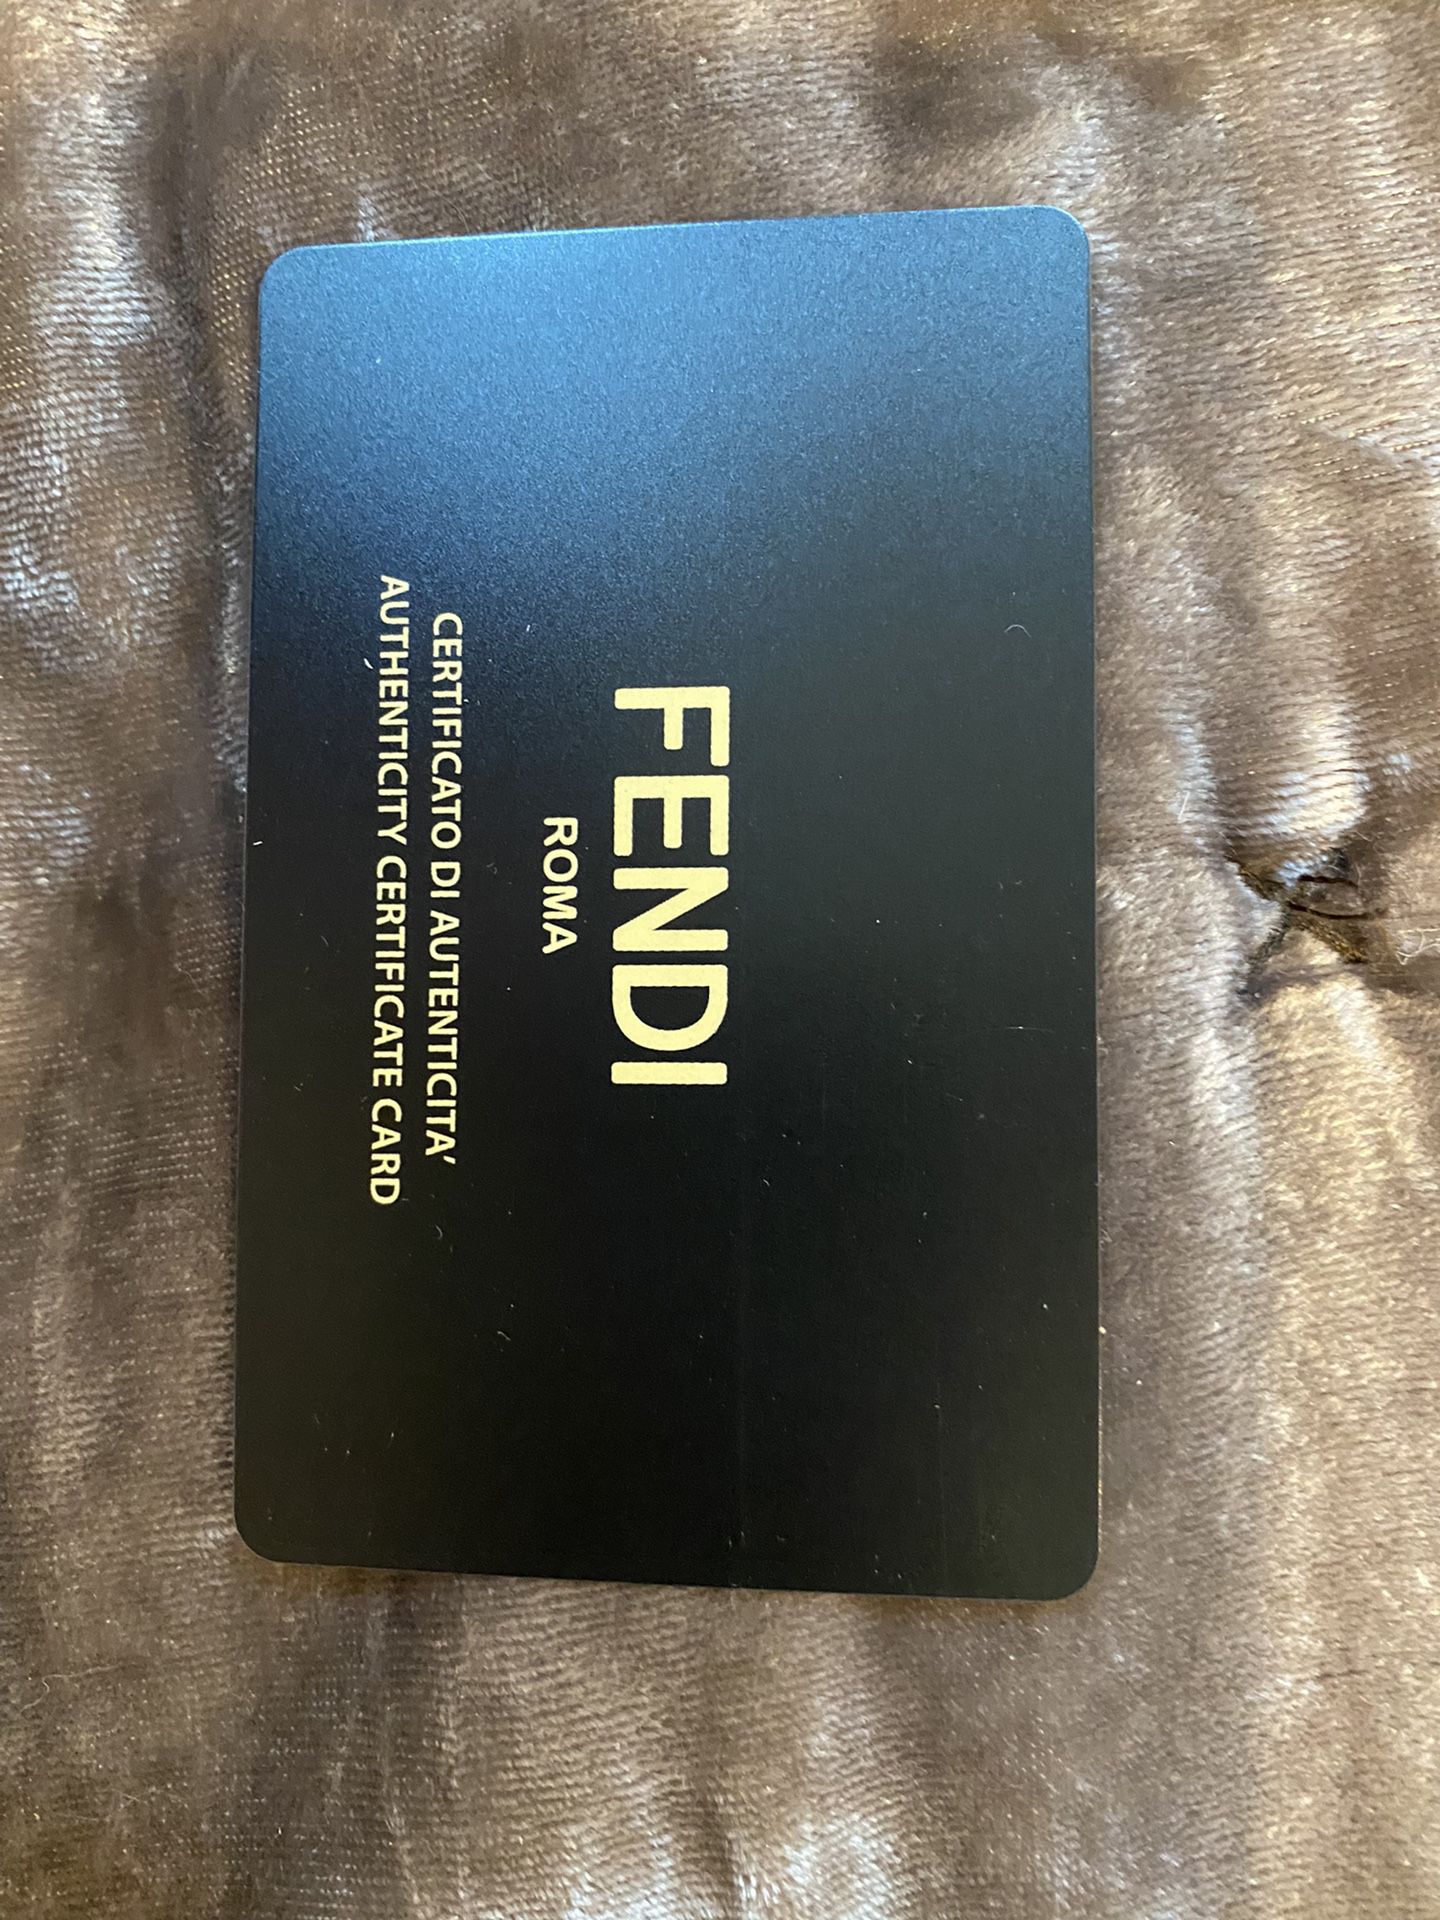 Fendi FF Forever Card Holder Black & Yellow Slide Out Bag Bugs Monster Eye  RARE for Sale in Garden Grove, CA - OfferUp